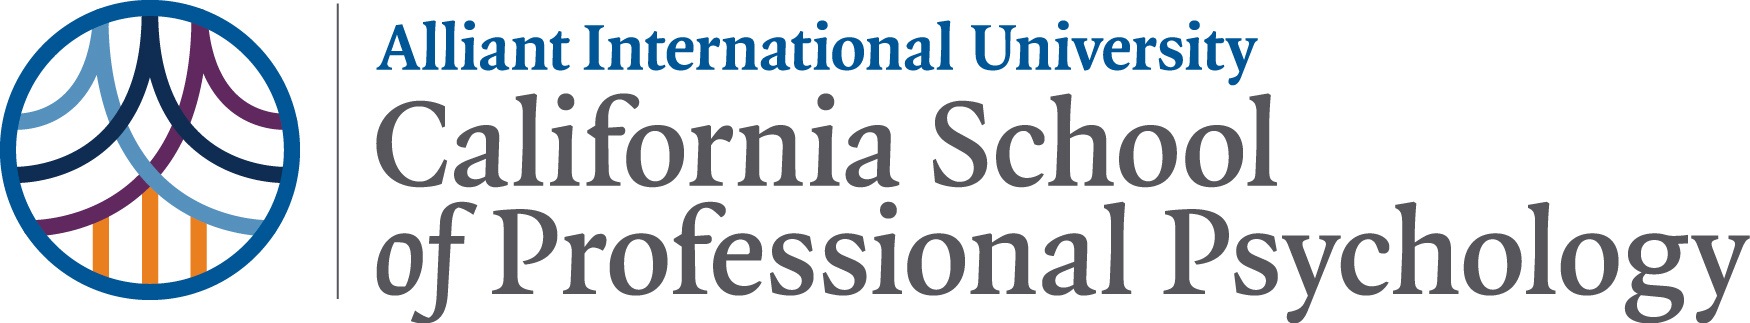 Alliant International University California School of Professional Psychology